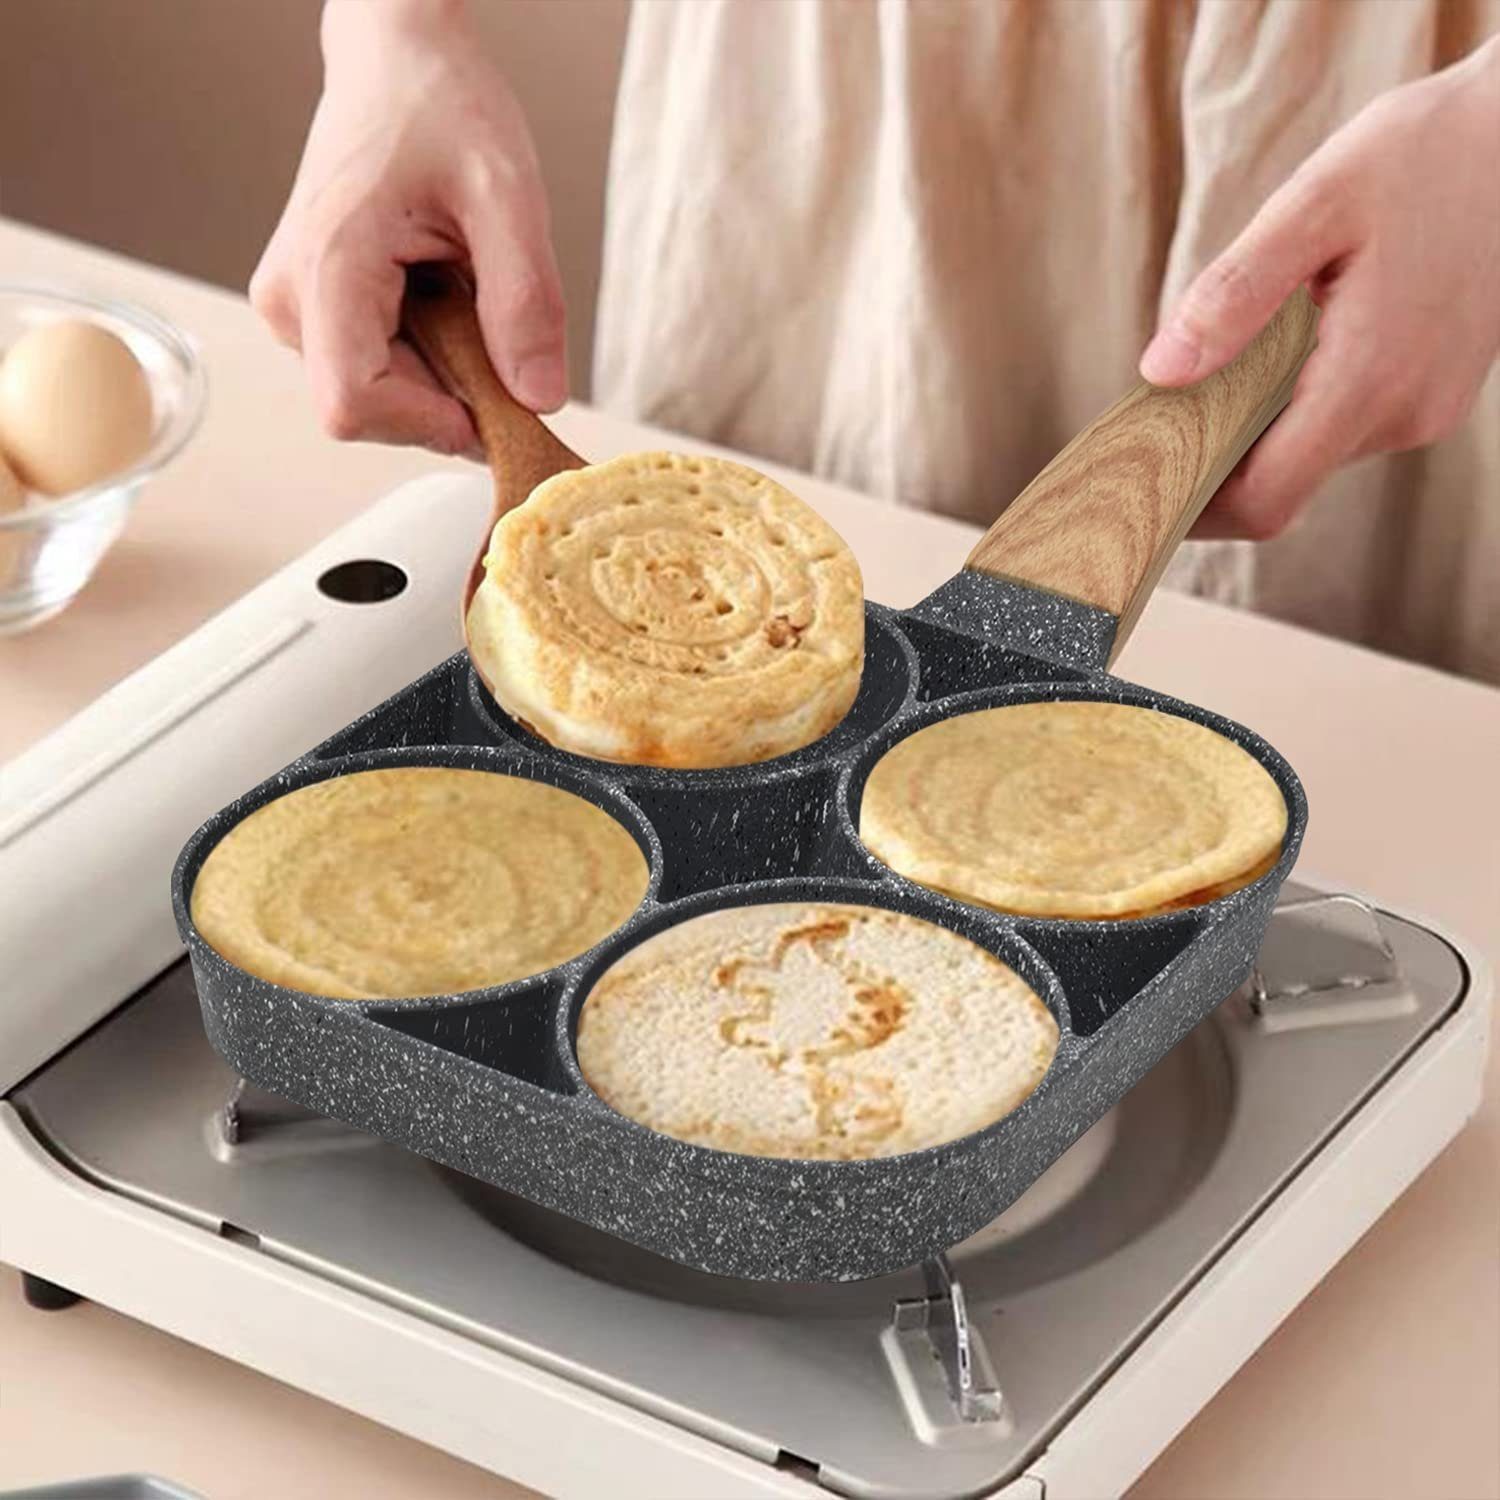 JOEJI’S KITCHEN Egg Pfannkuchenpfanne Crêpepfanne Induktion Pfanne Frying Maker - Pan Pancake